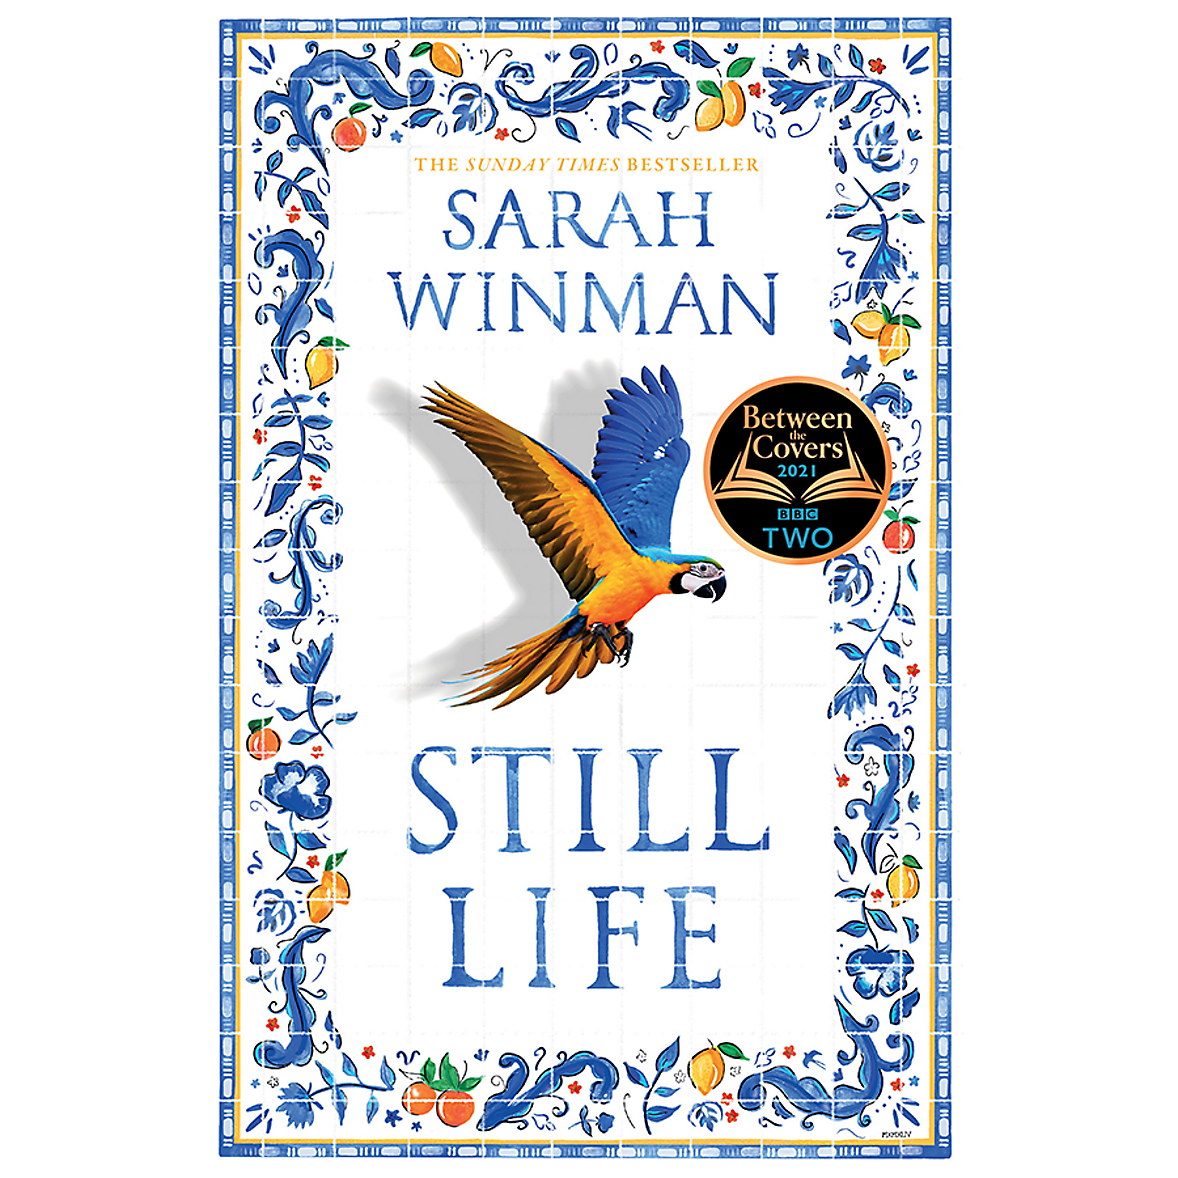 Still Life by Sarah Winman